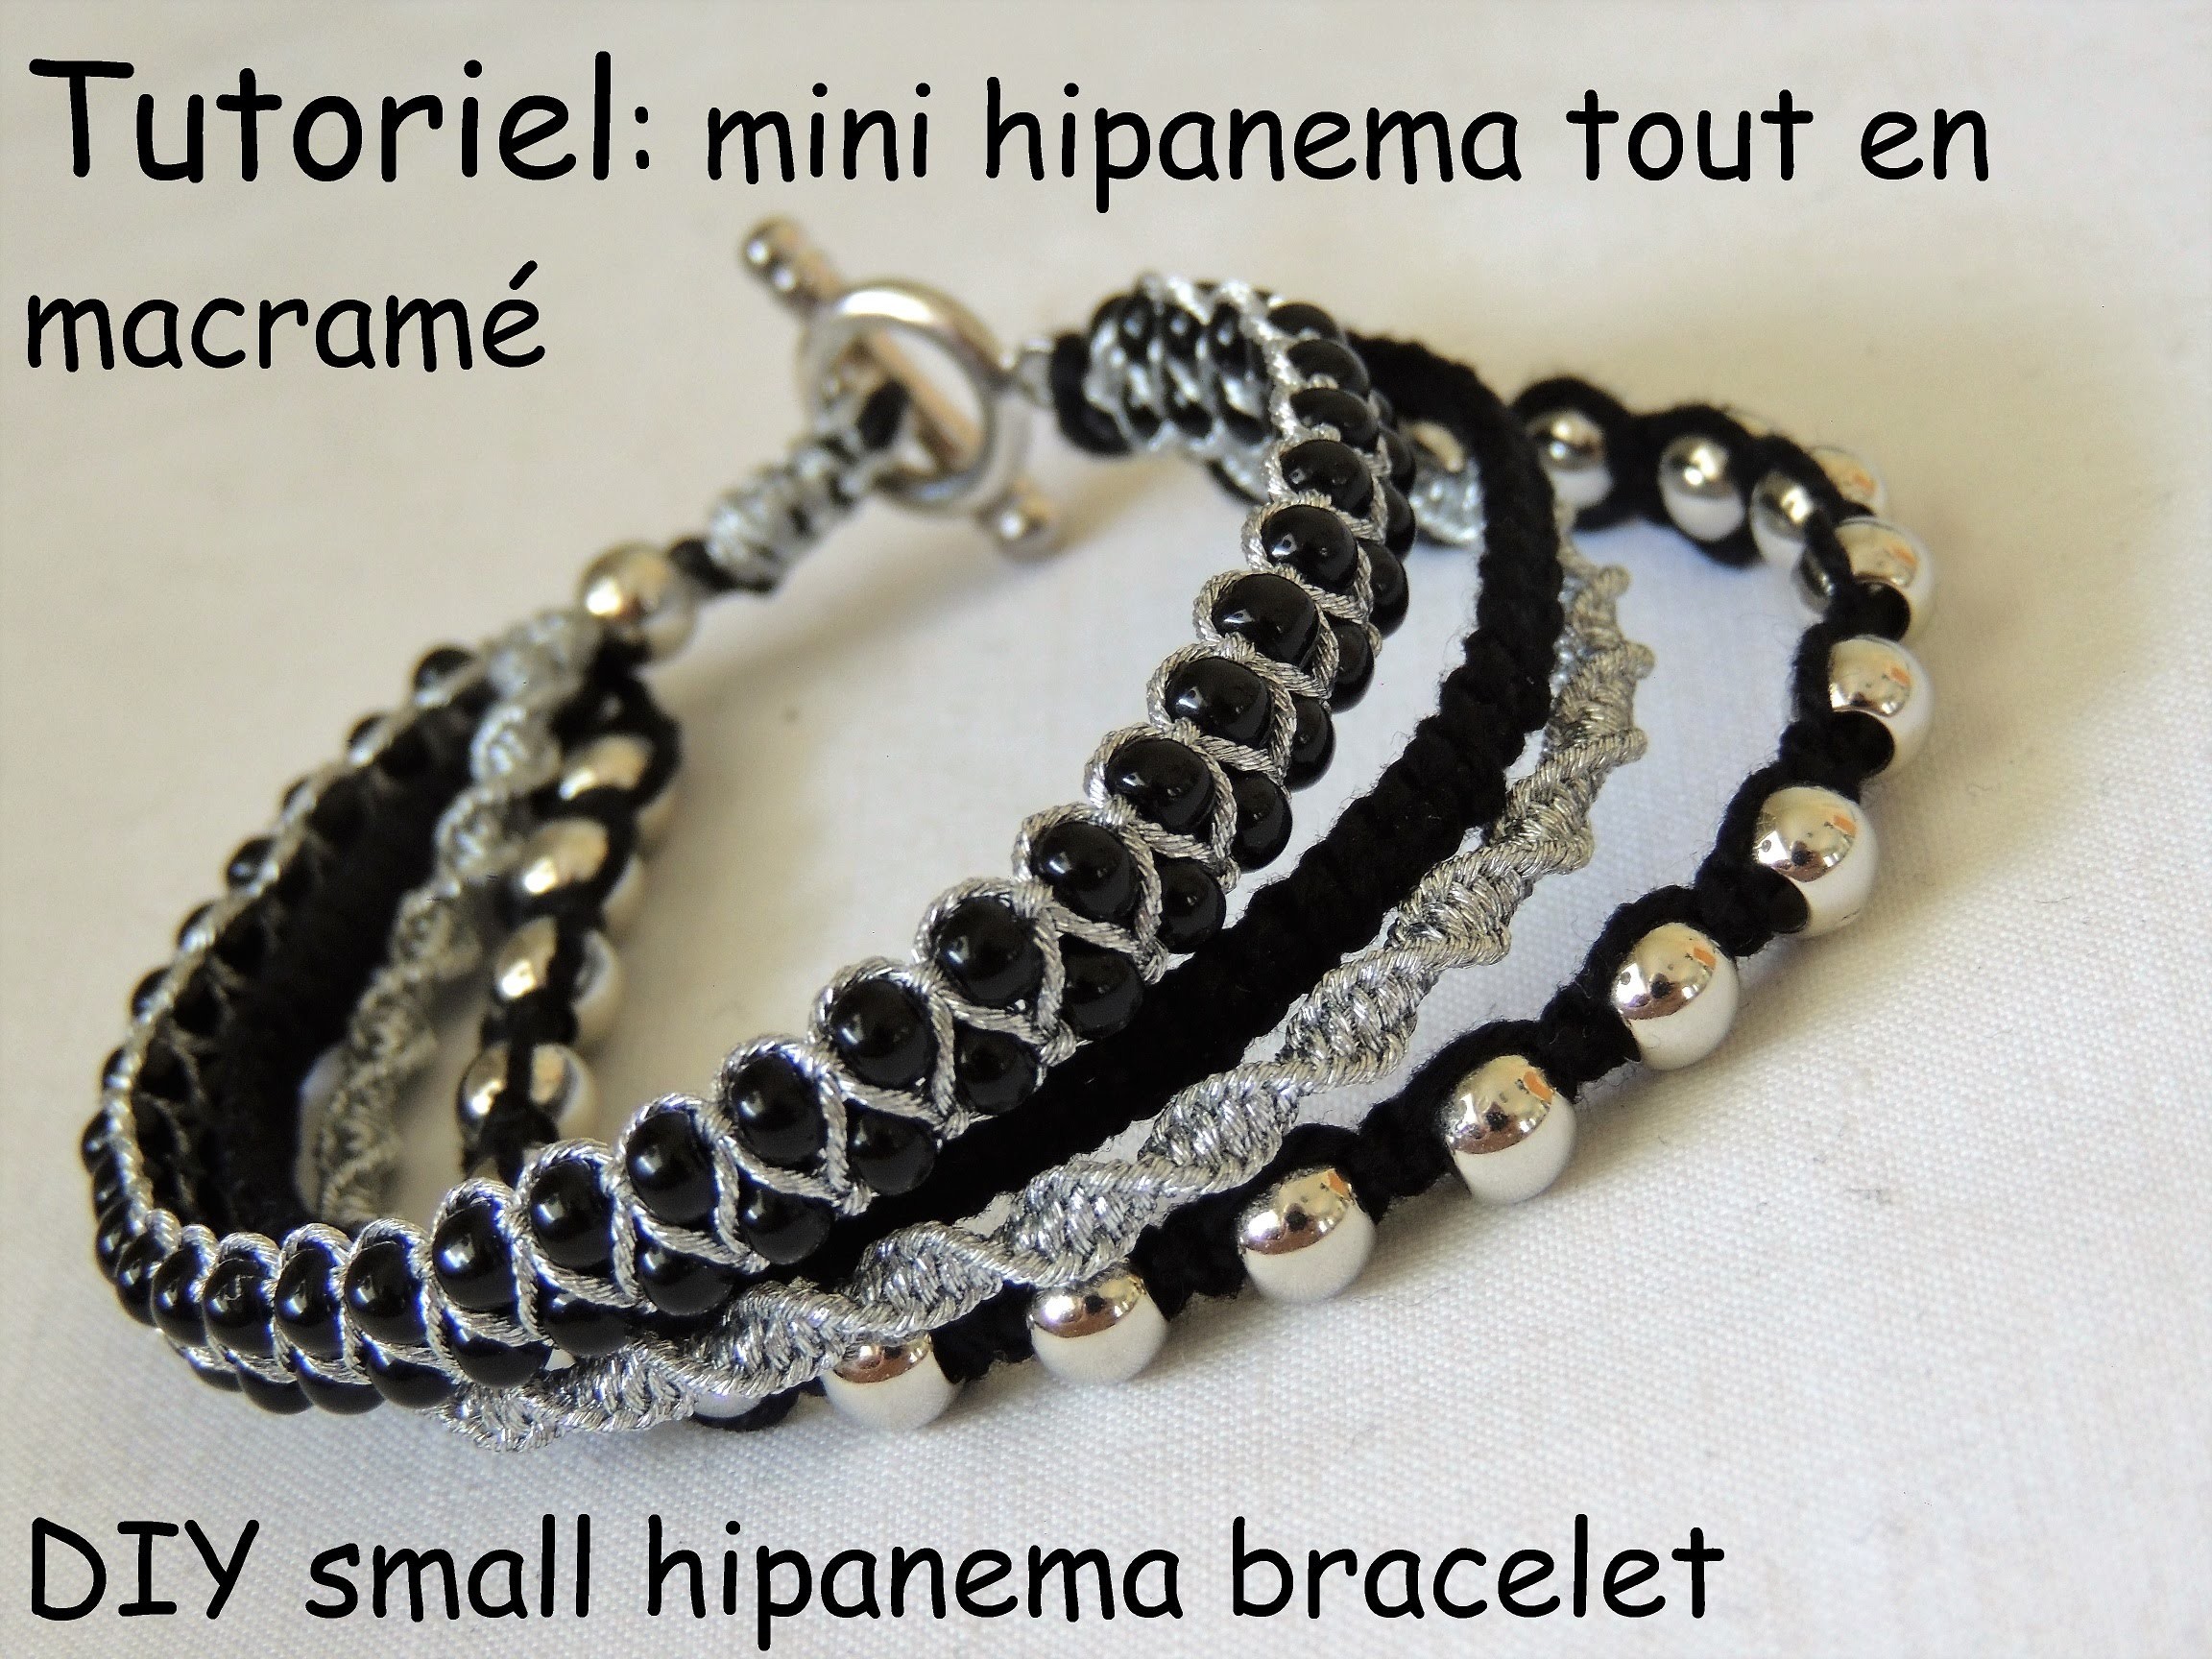 Bracelet inspiration "mini" hipanema tout en macramé DIY small hipanema bracelet